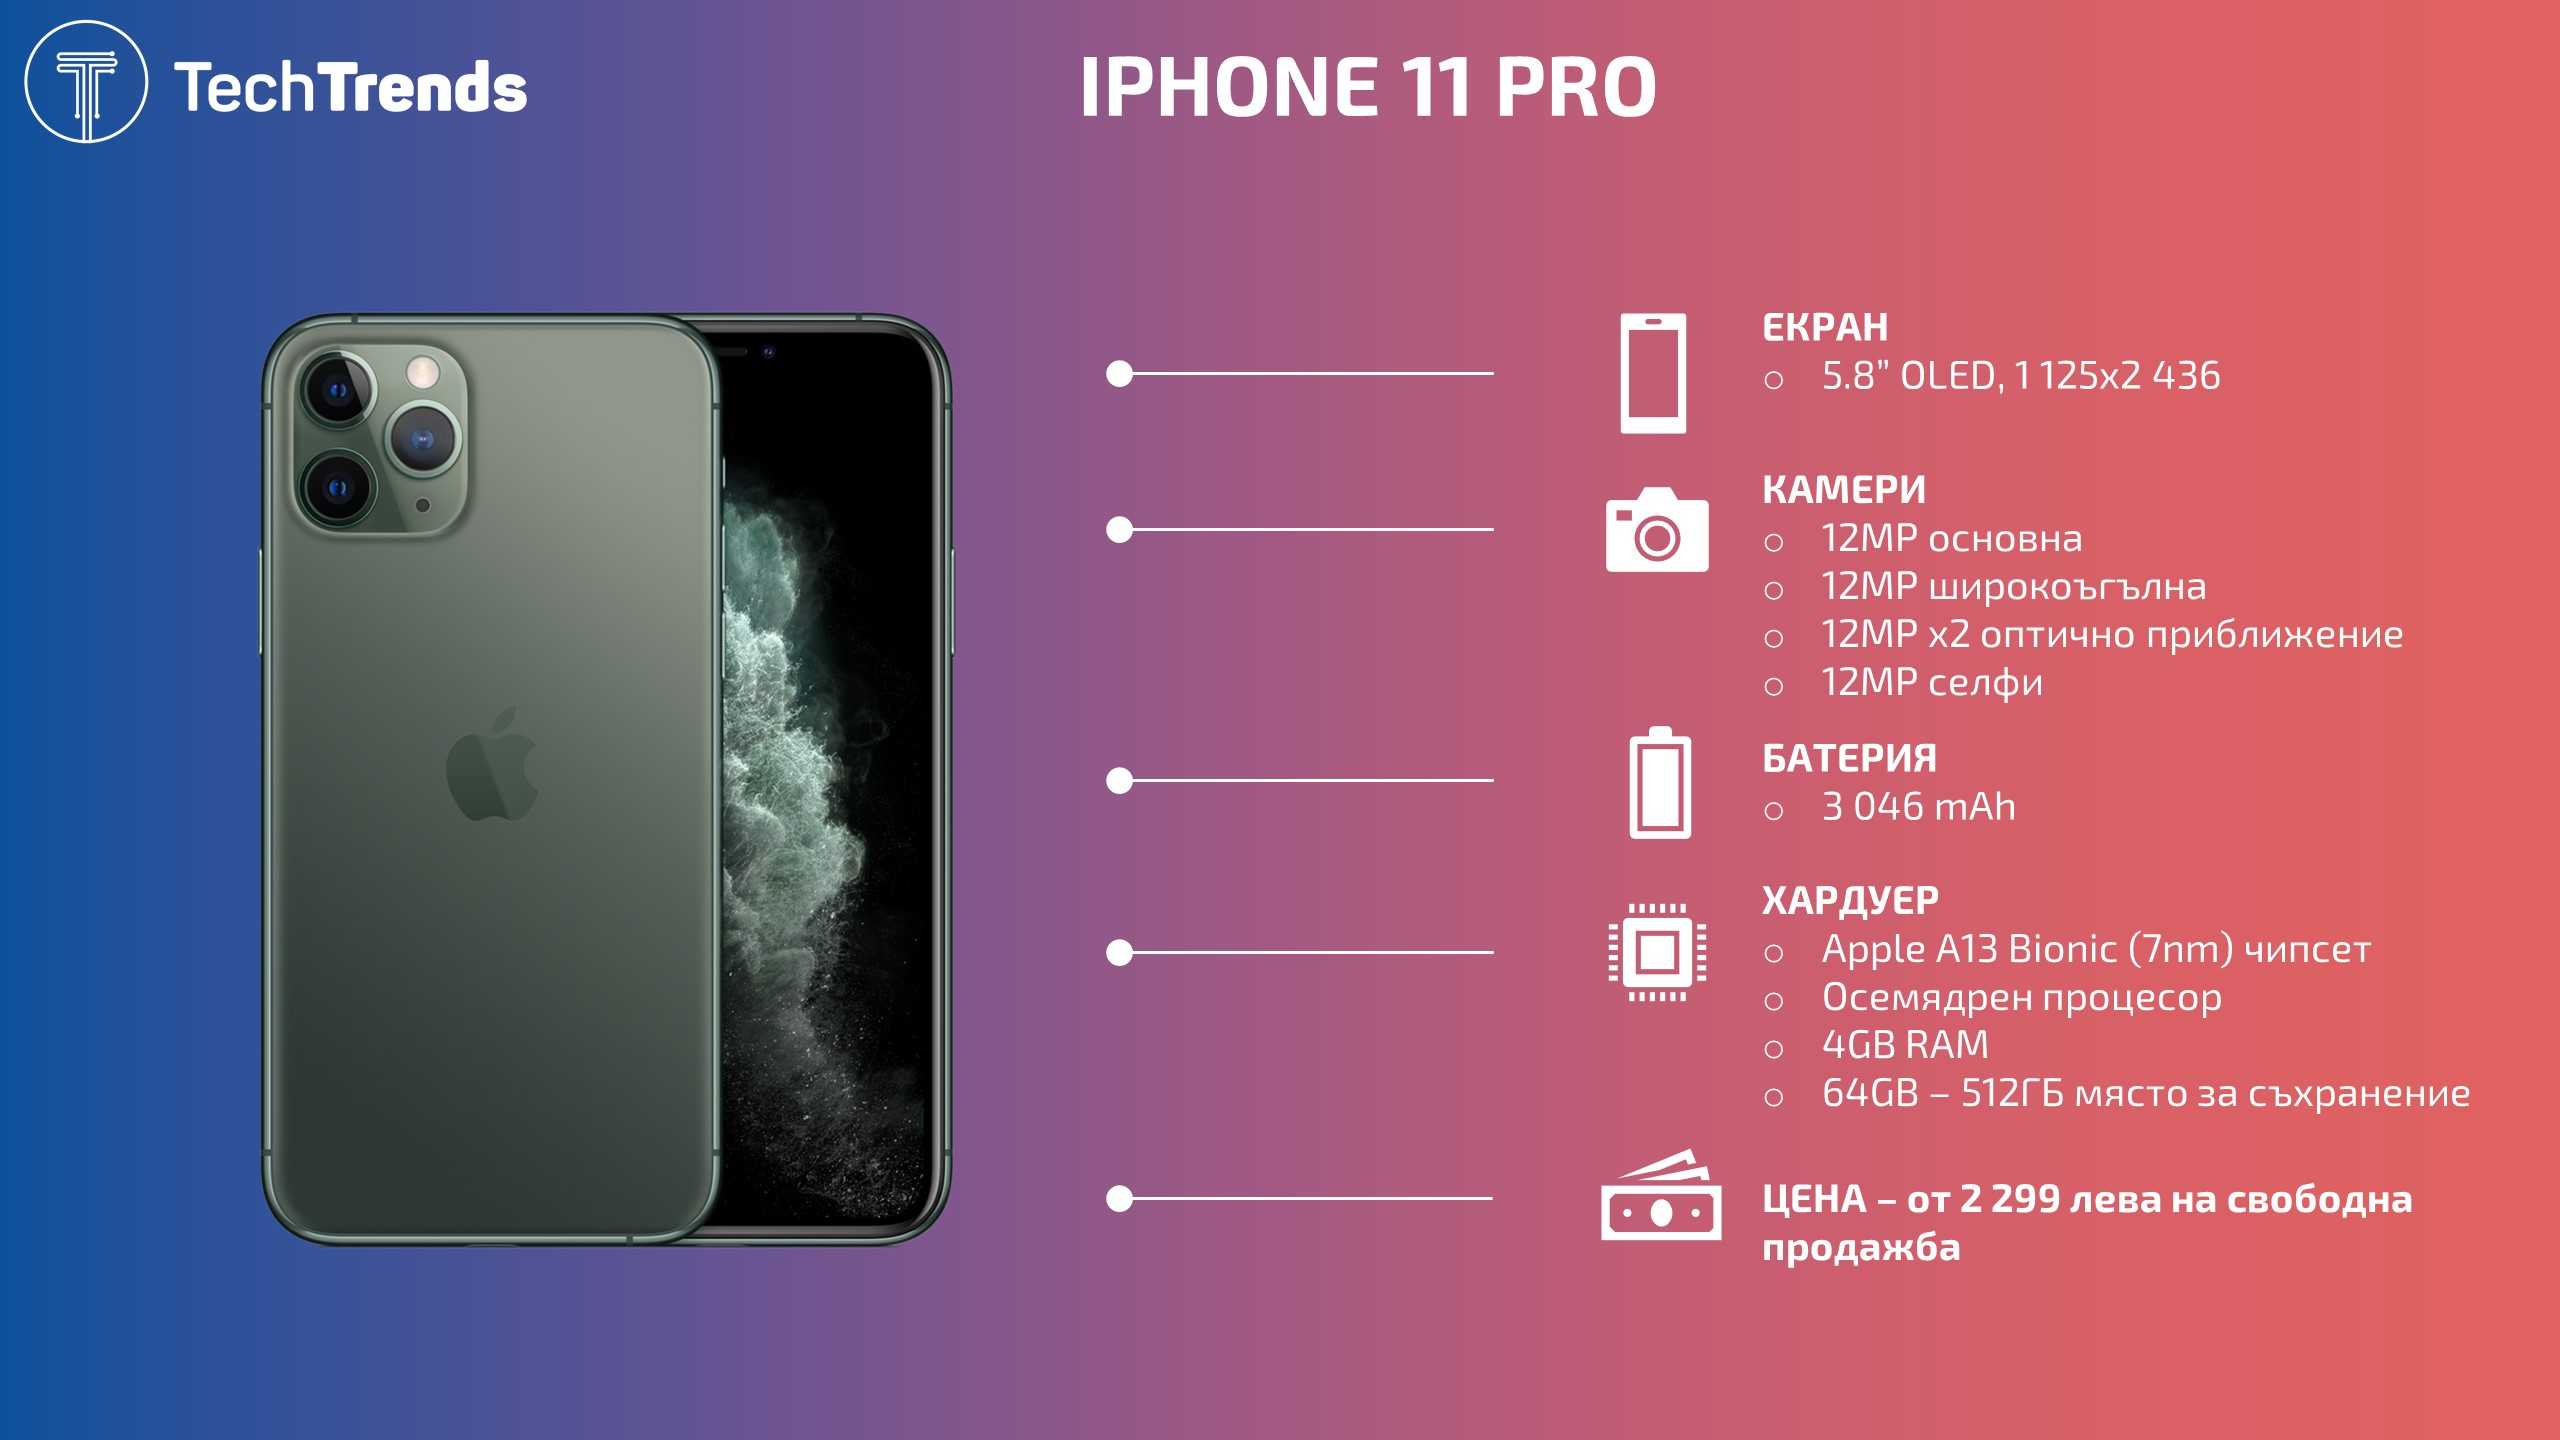 Iphone 12 pro герц